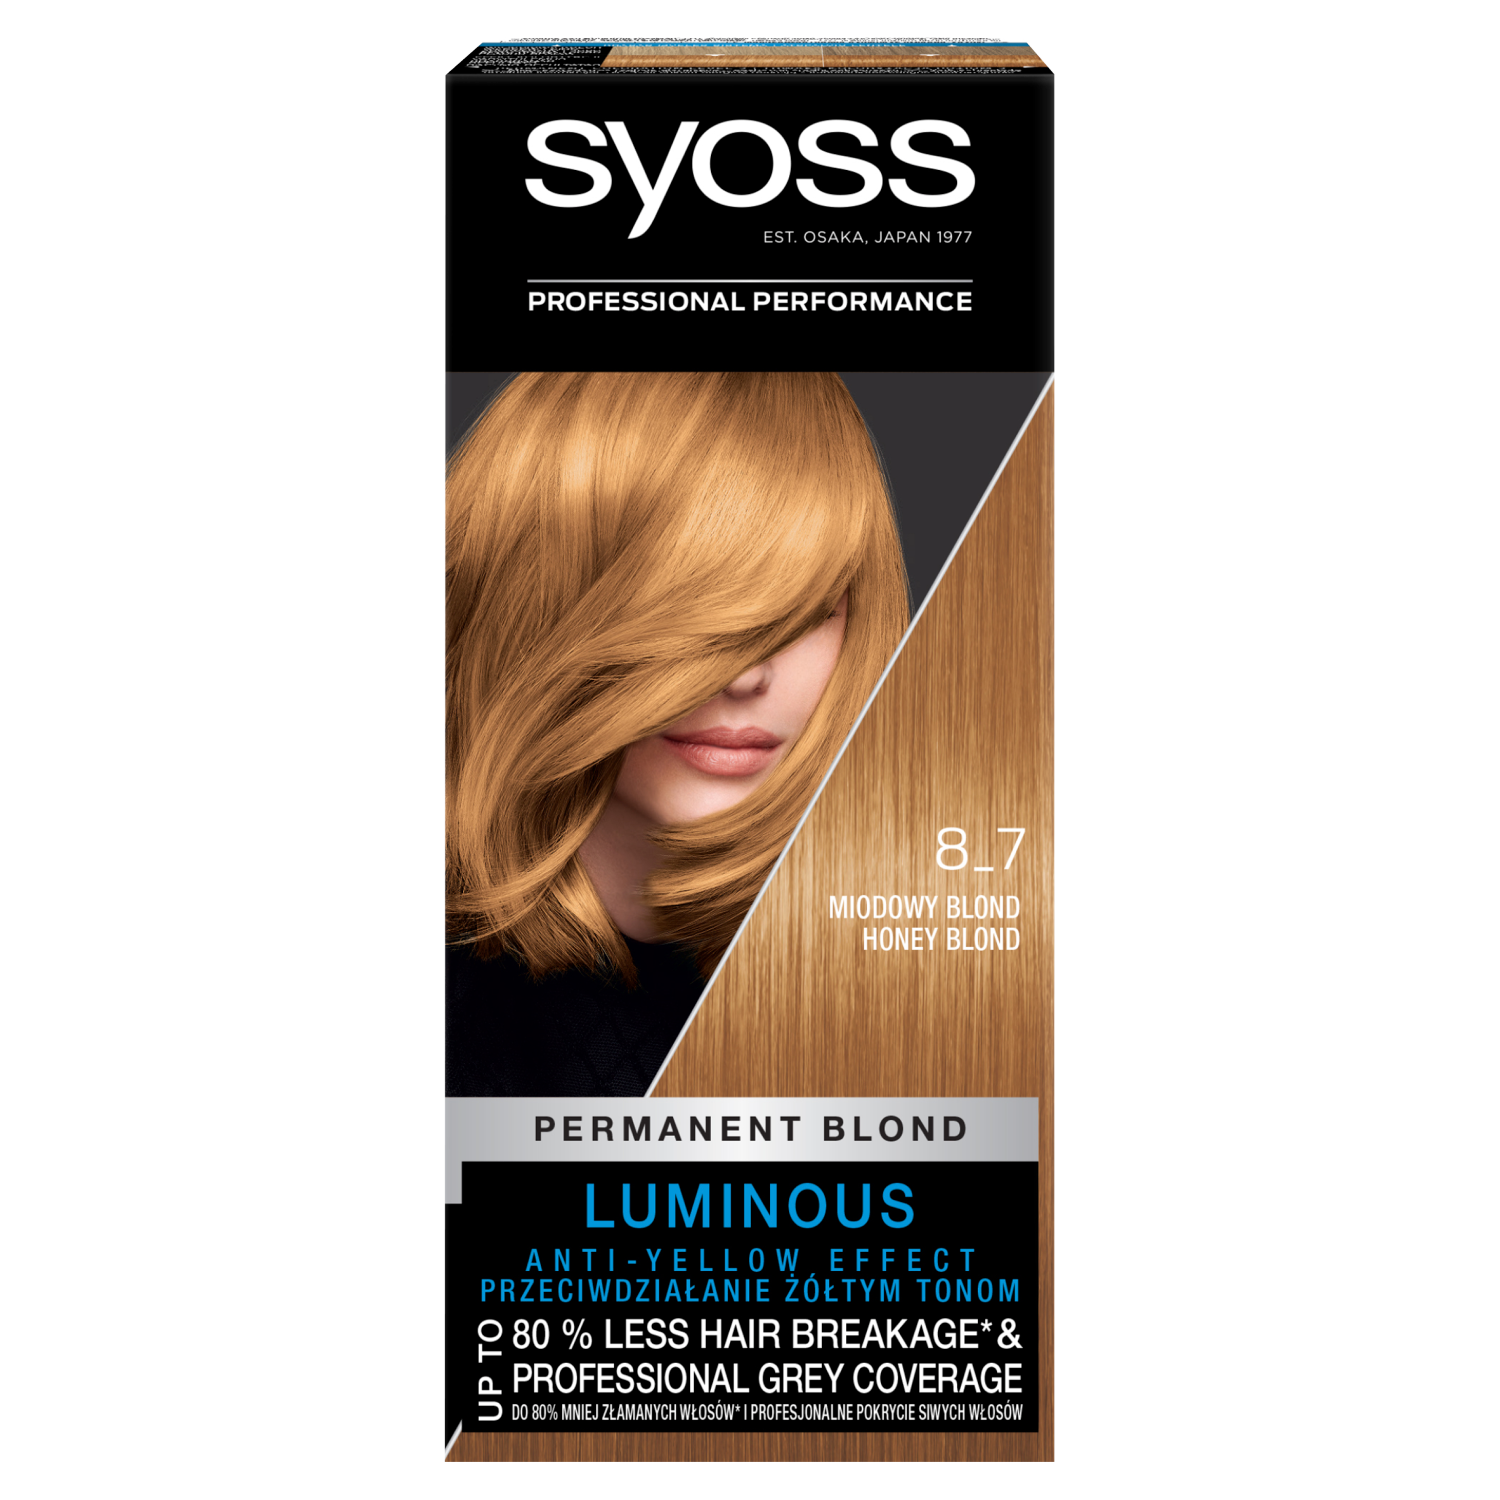 Syoss Salon Plex краска для волос 8-7 медовый блонд, 1 упаковка